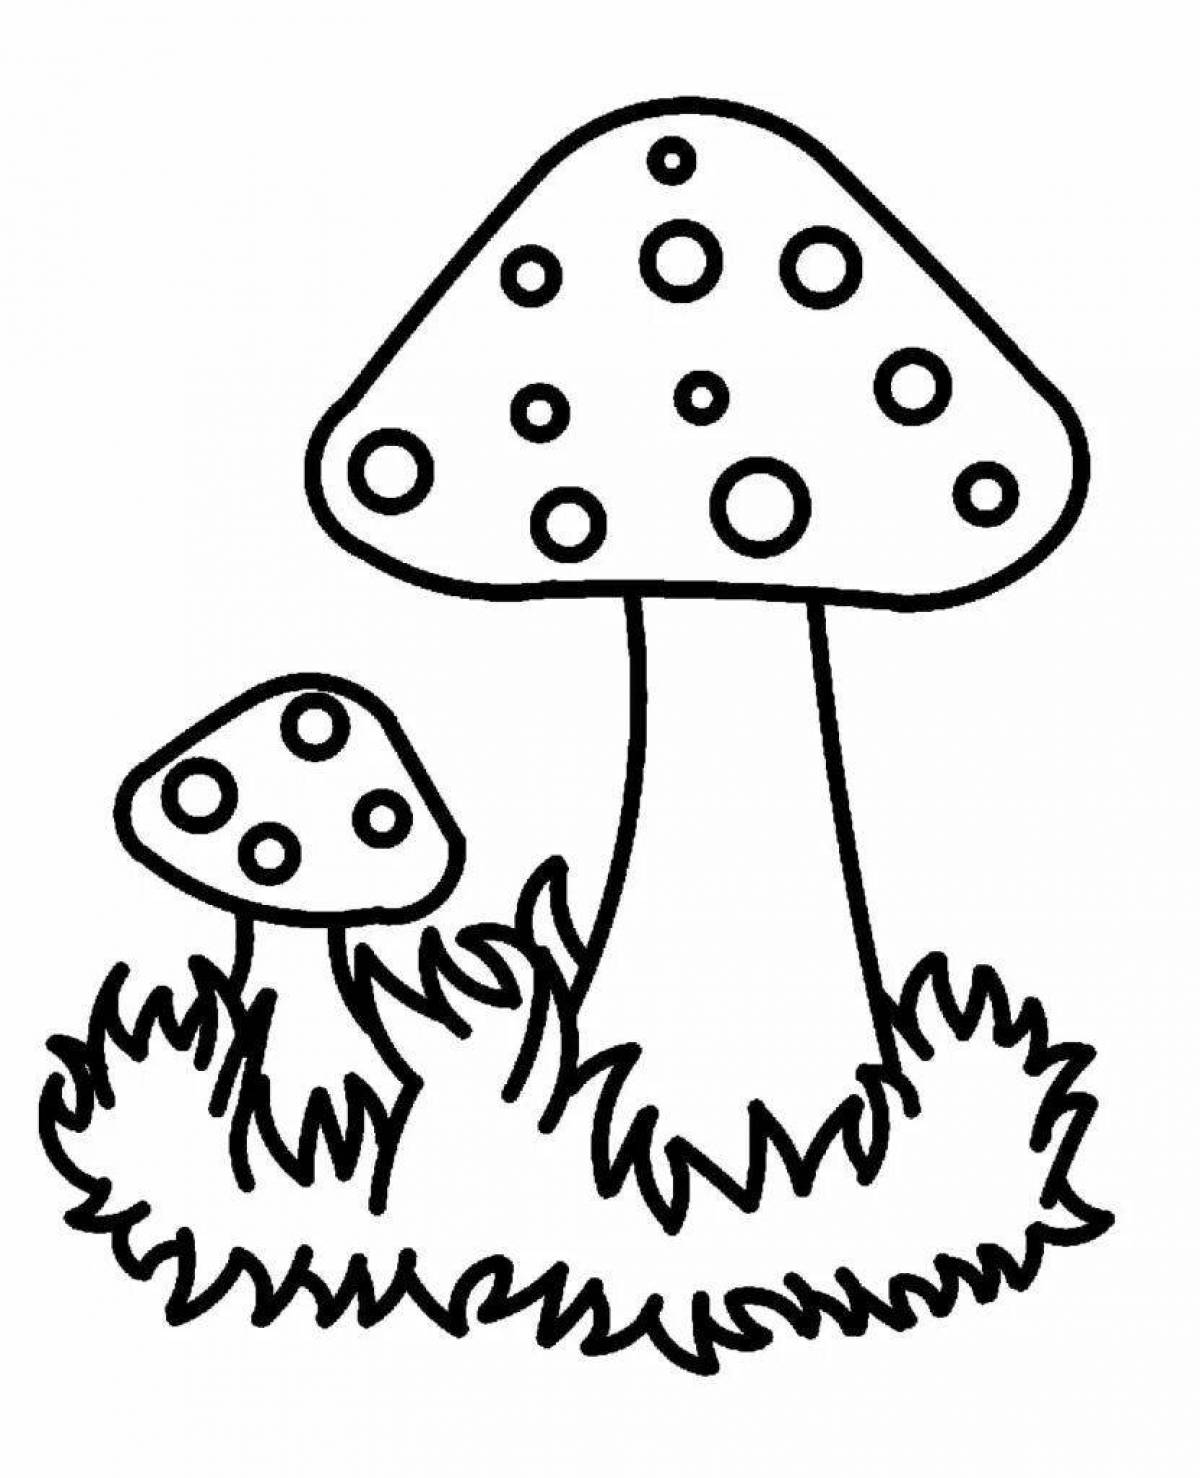 Drawing of shiny mushrooms